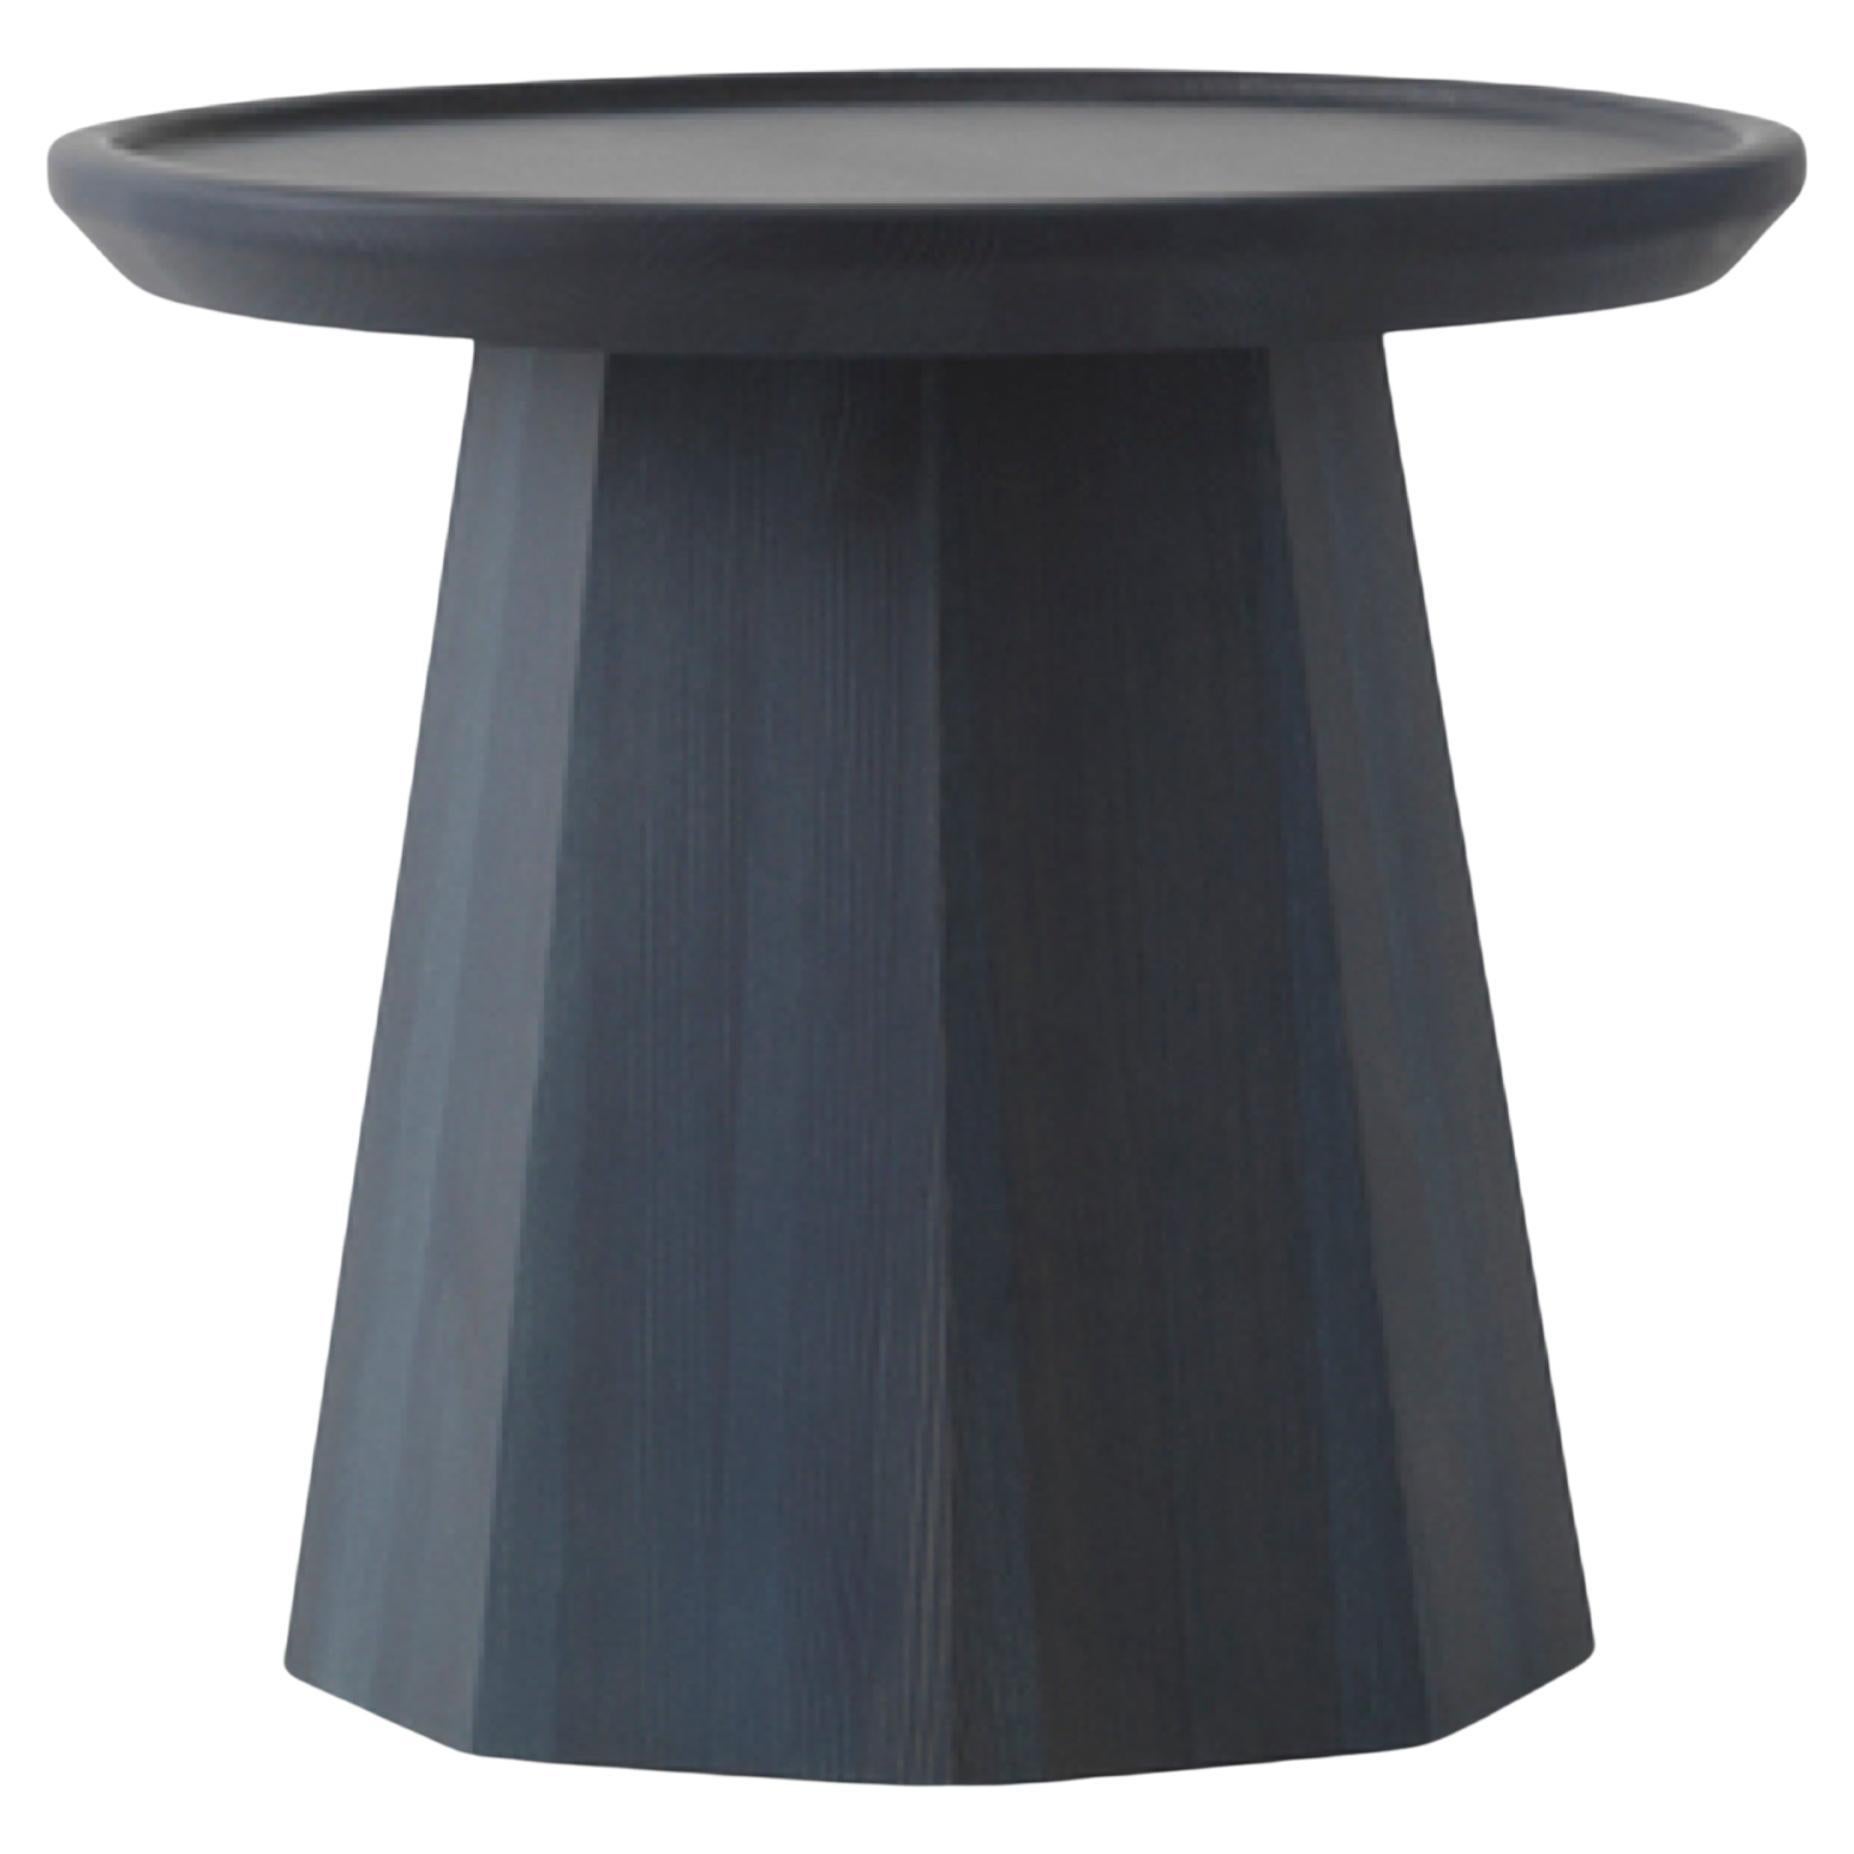 Normann Copenhagen Pine Dark Blue Small Table Designed by Simon Legald For Sale